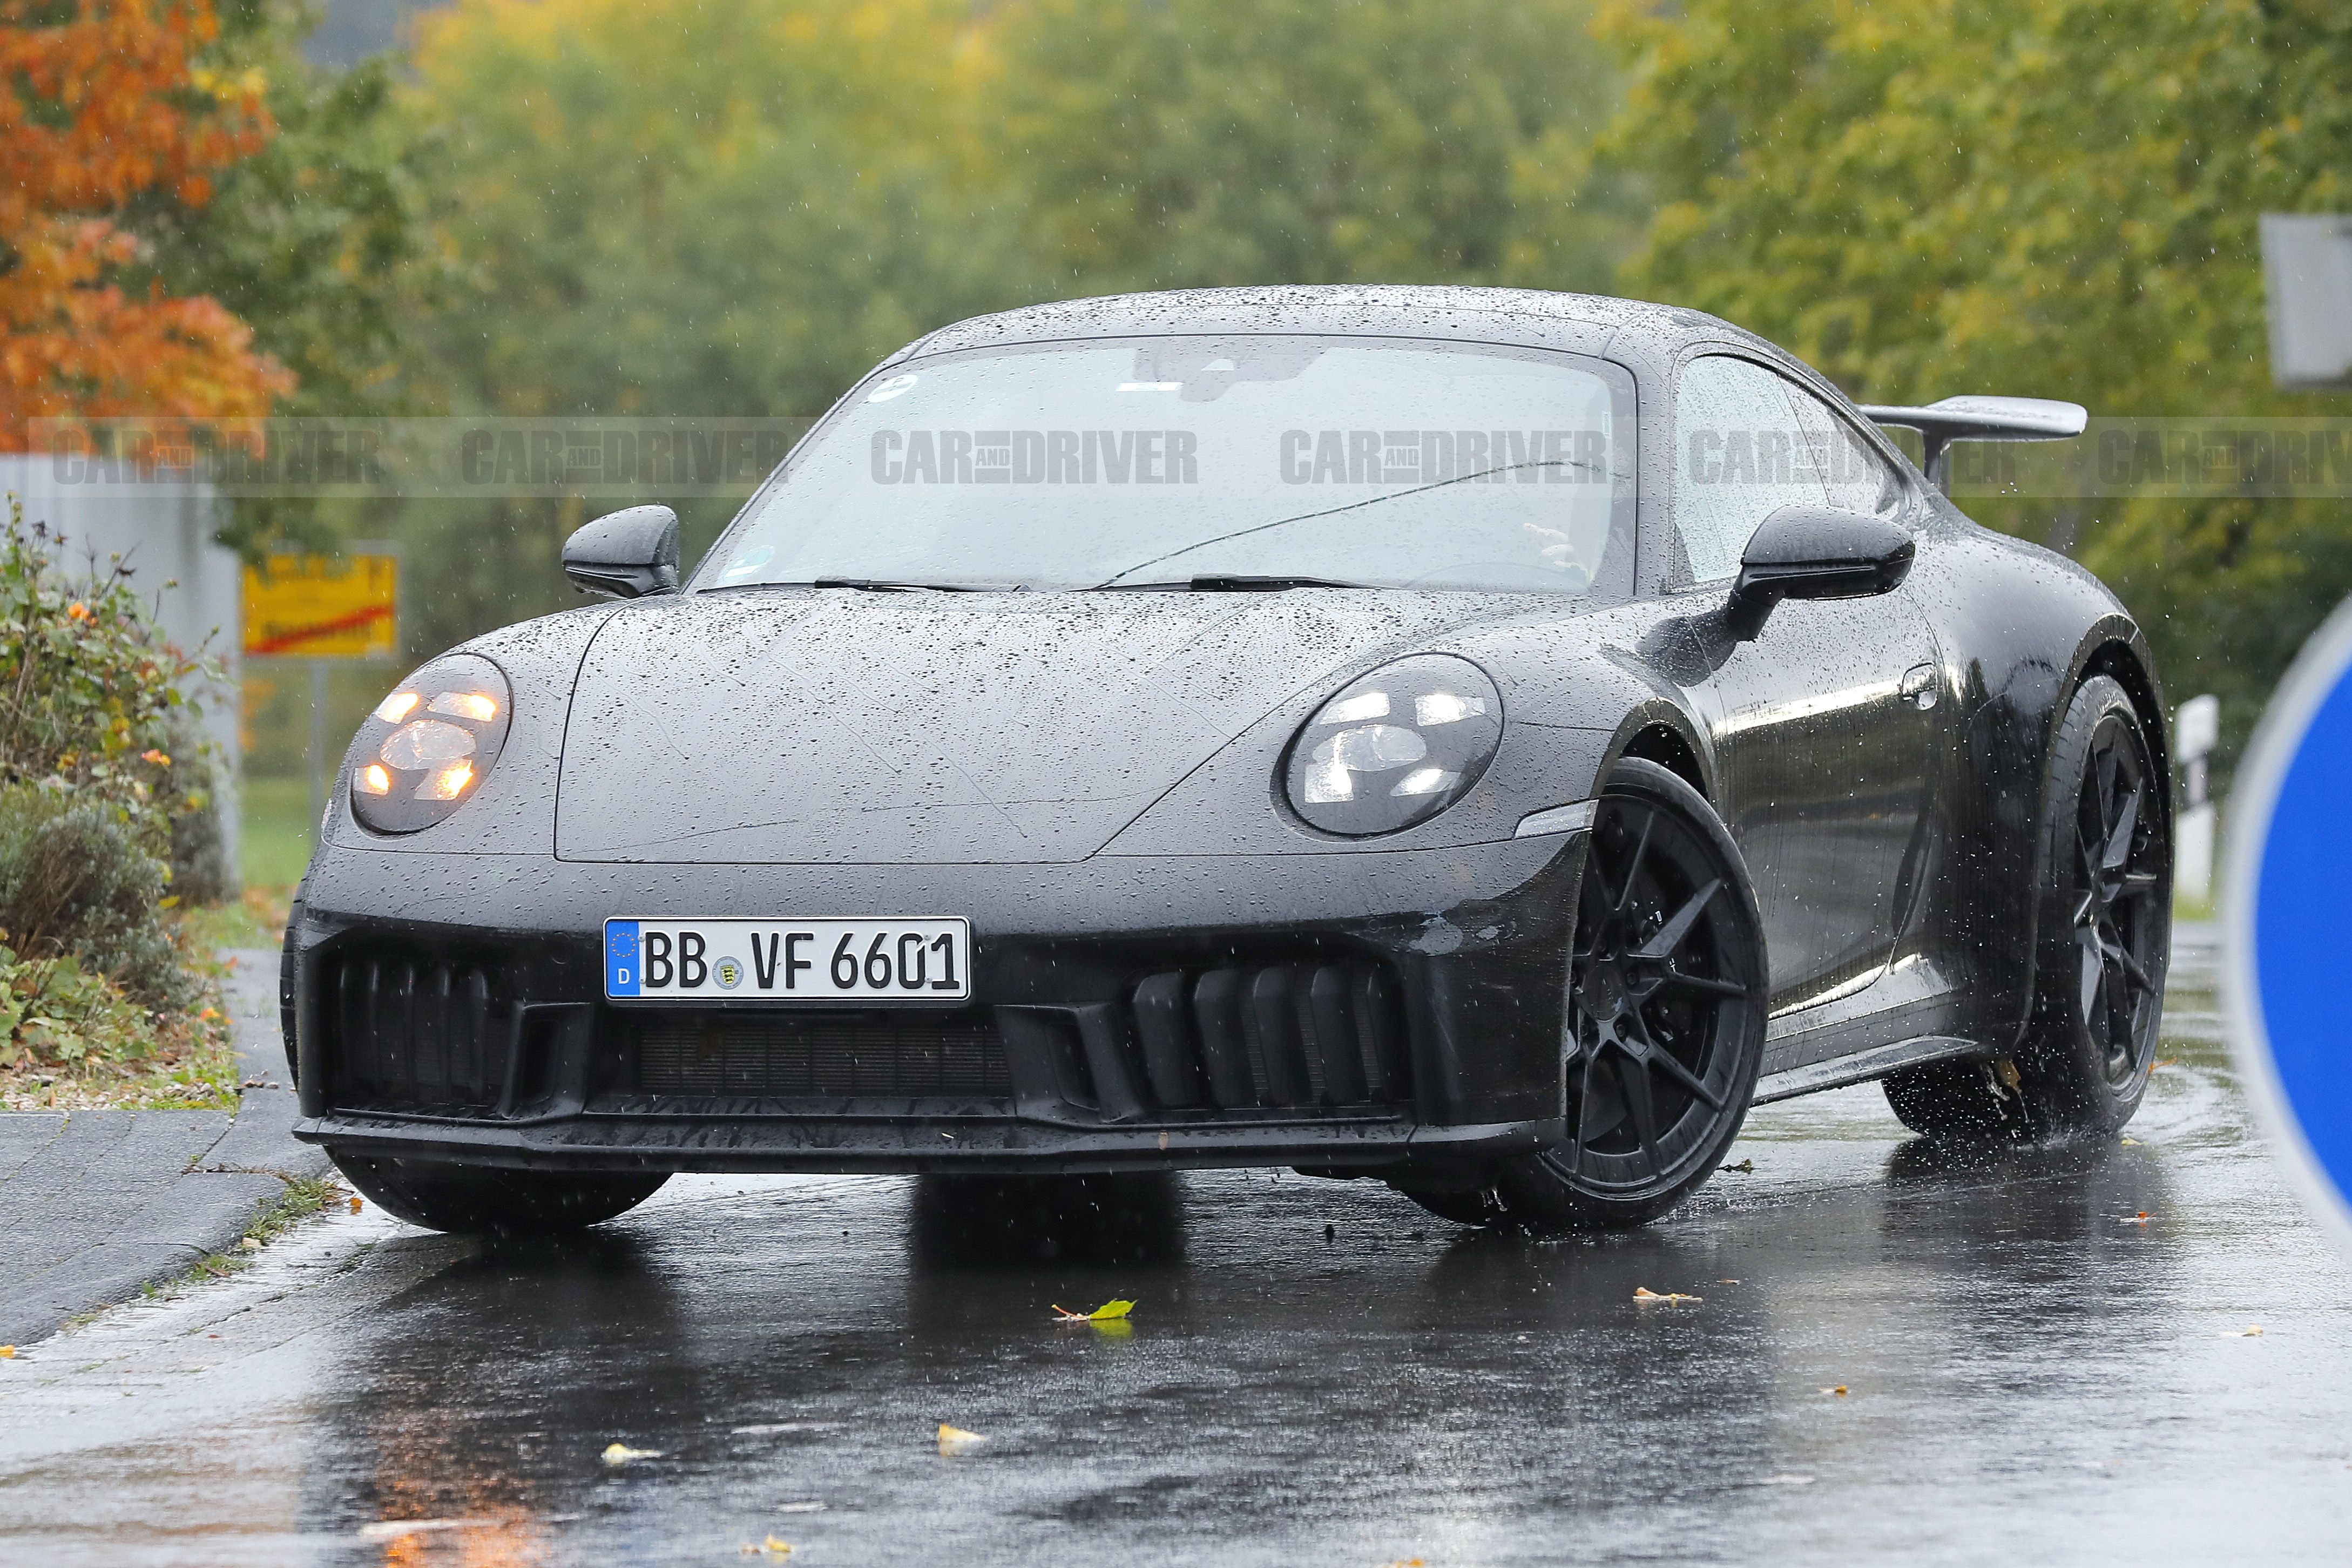 2025 Porsche 911 Turbo S hybrid nears end of development